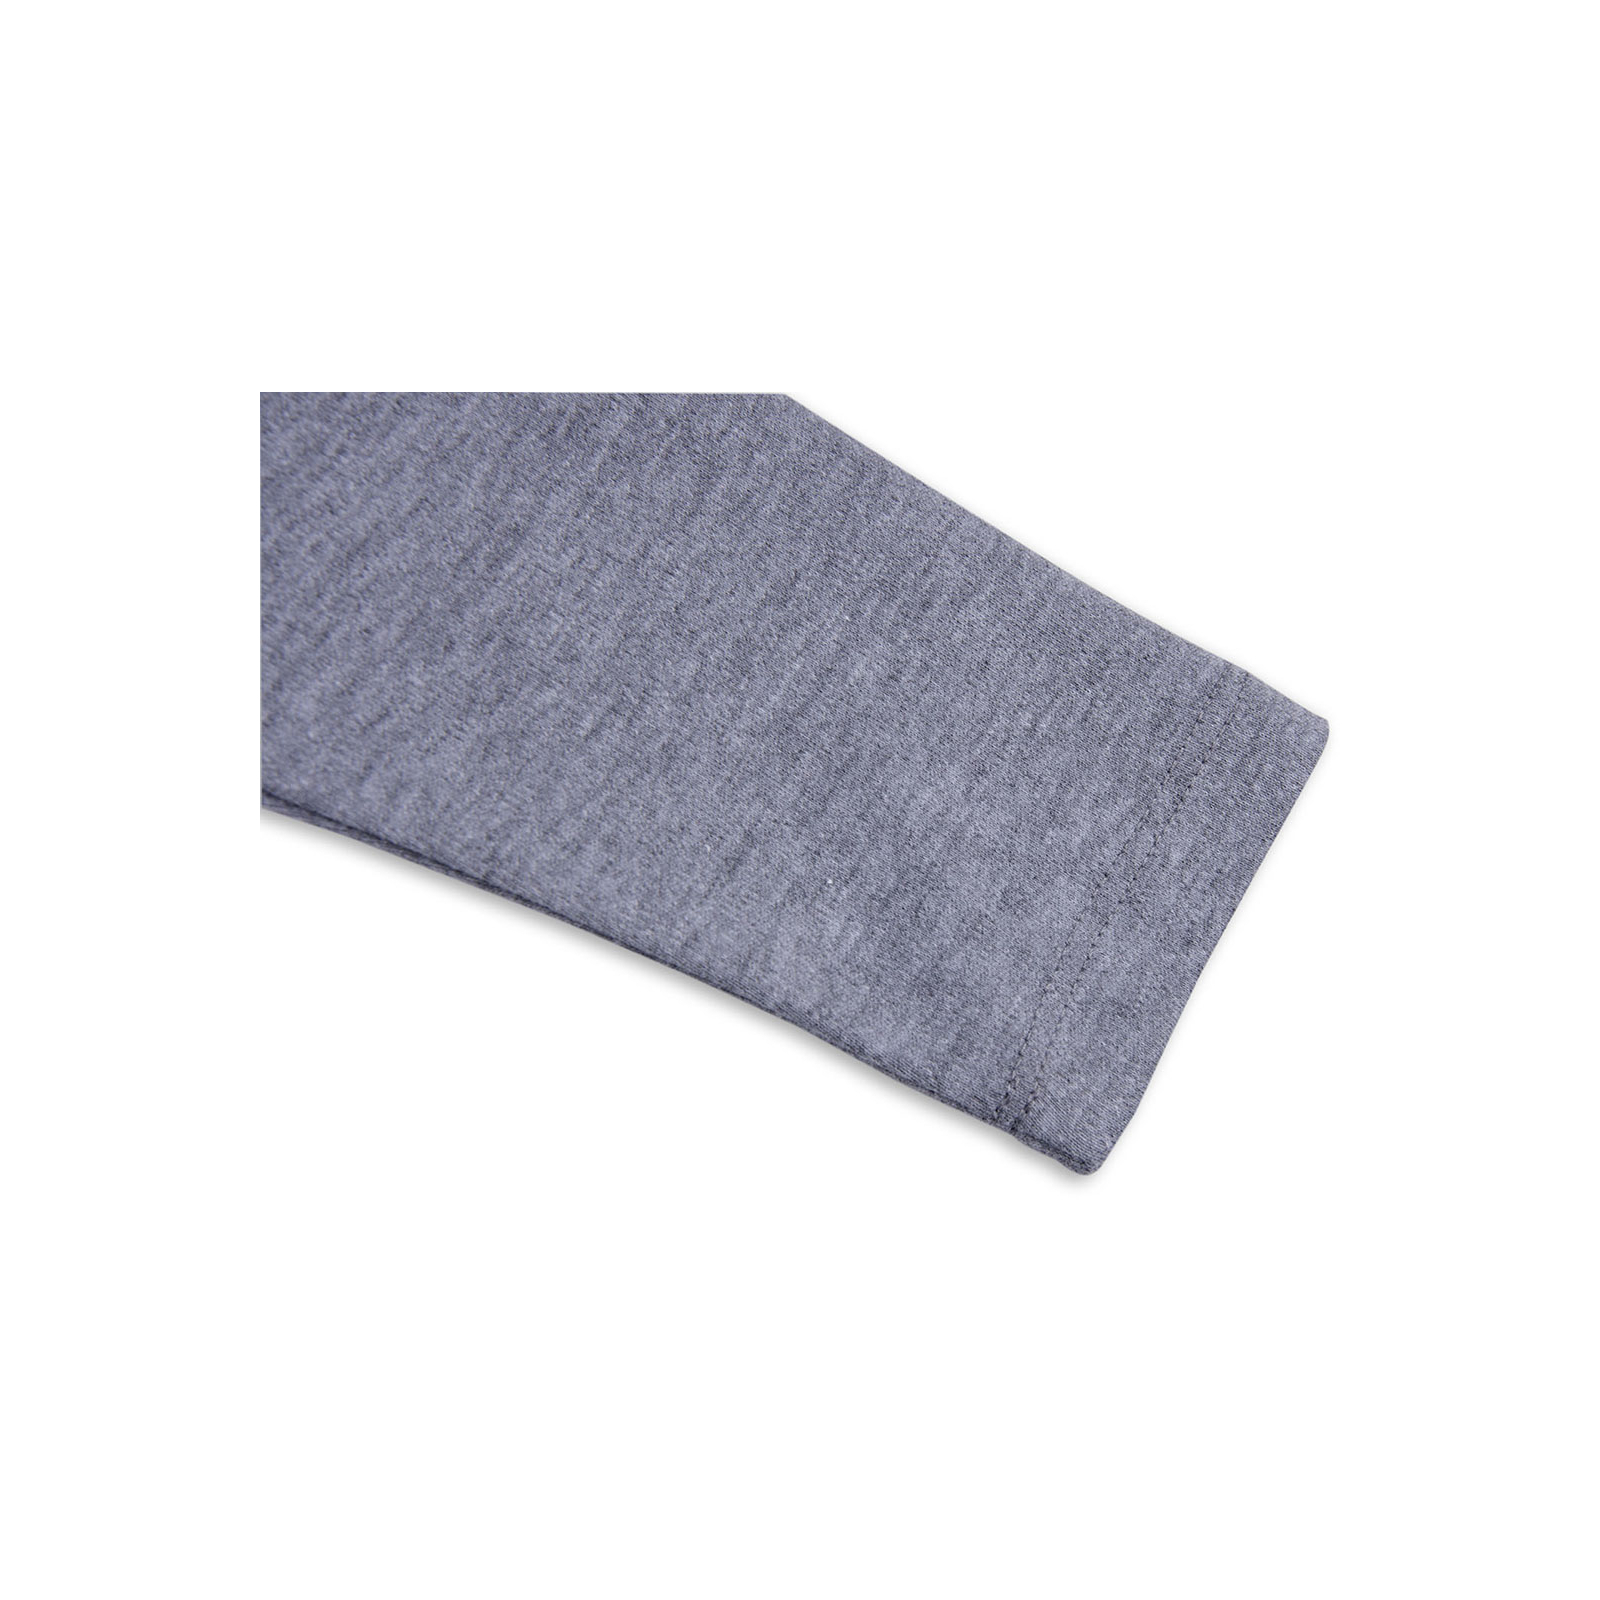 Кофта Lovetti водолазка серая меланжевая (1011-104-gray) изображение 4